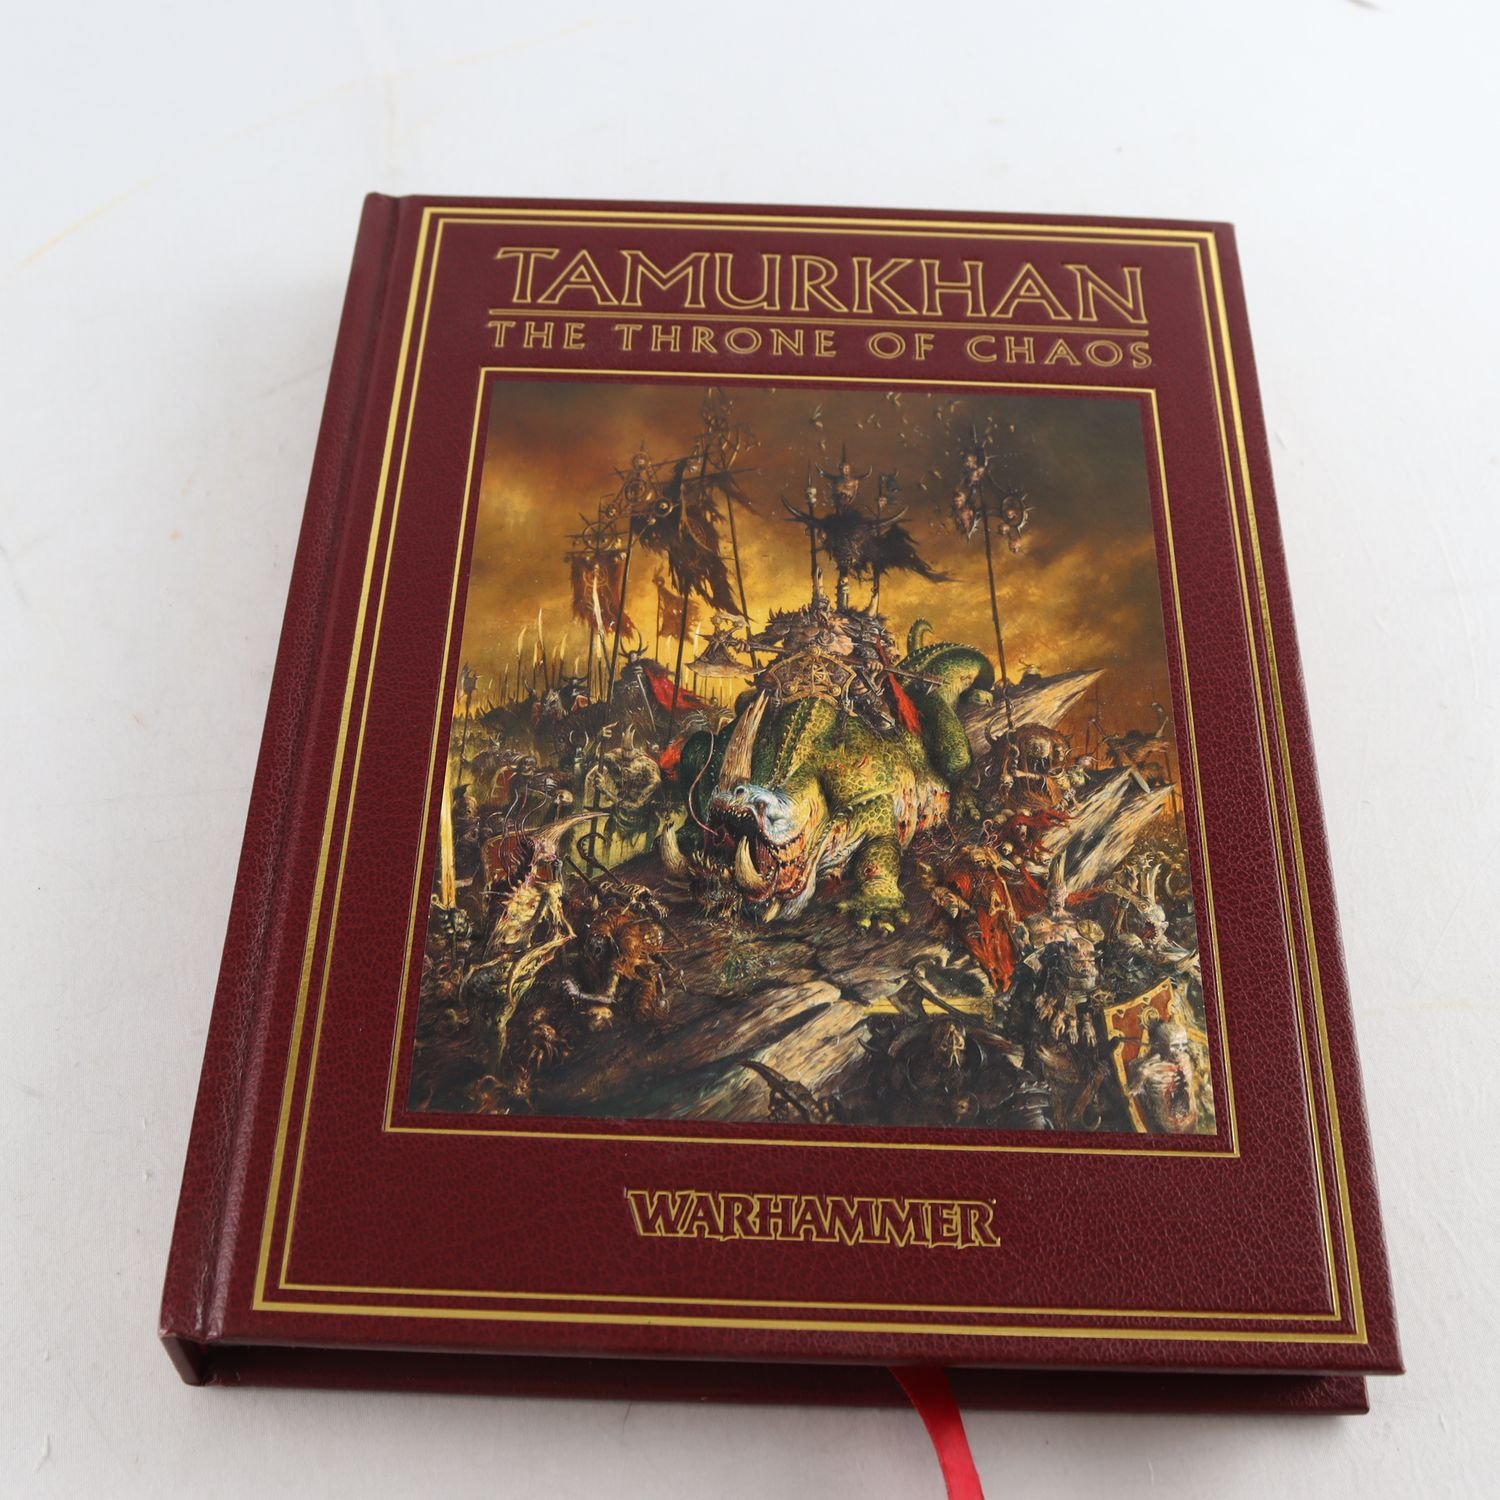 Tamurkhan: The Throne of Chaos (Warhammer)